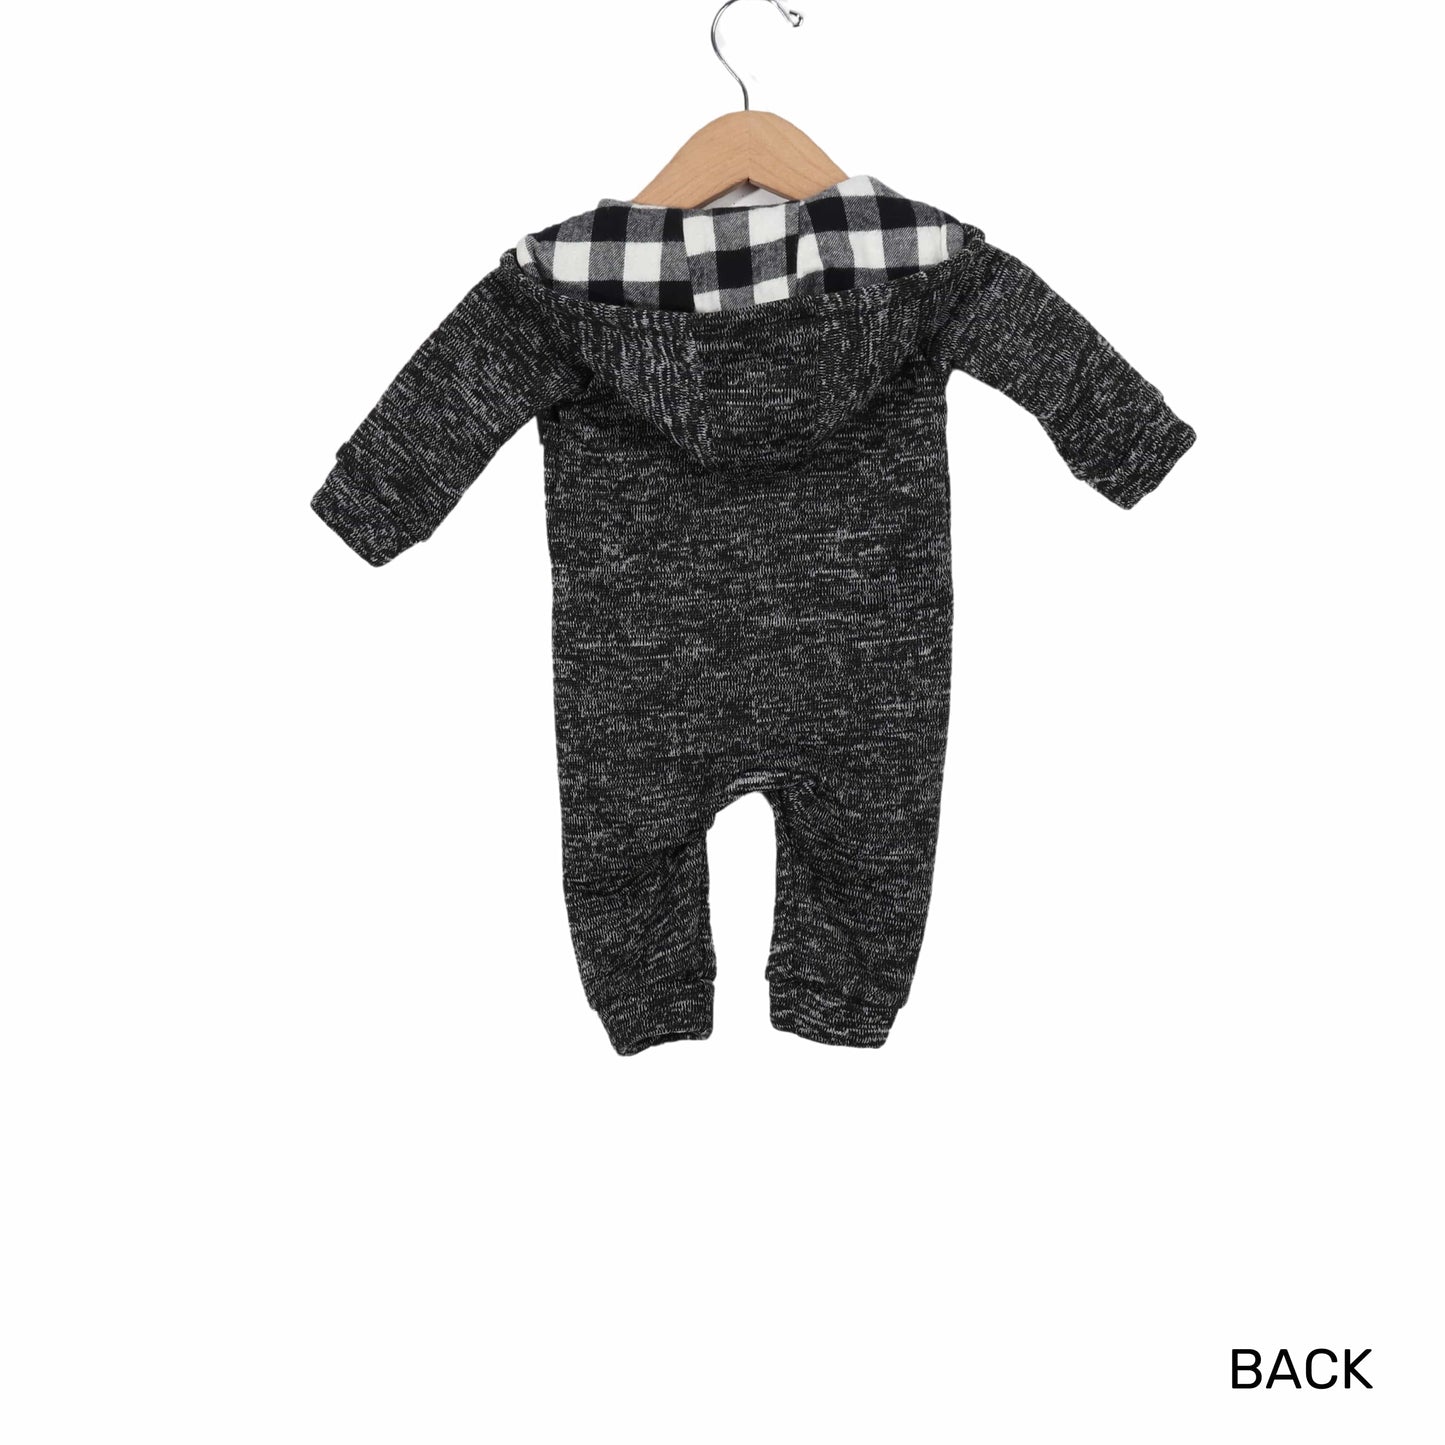 CARTER'S Baby Boy 6 Month / Black CARTER'S - Baby - Zipper Closure Overall